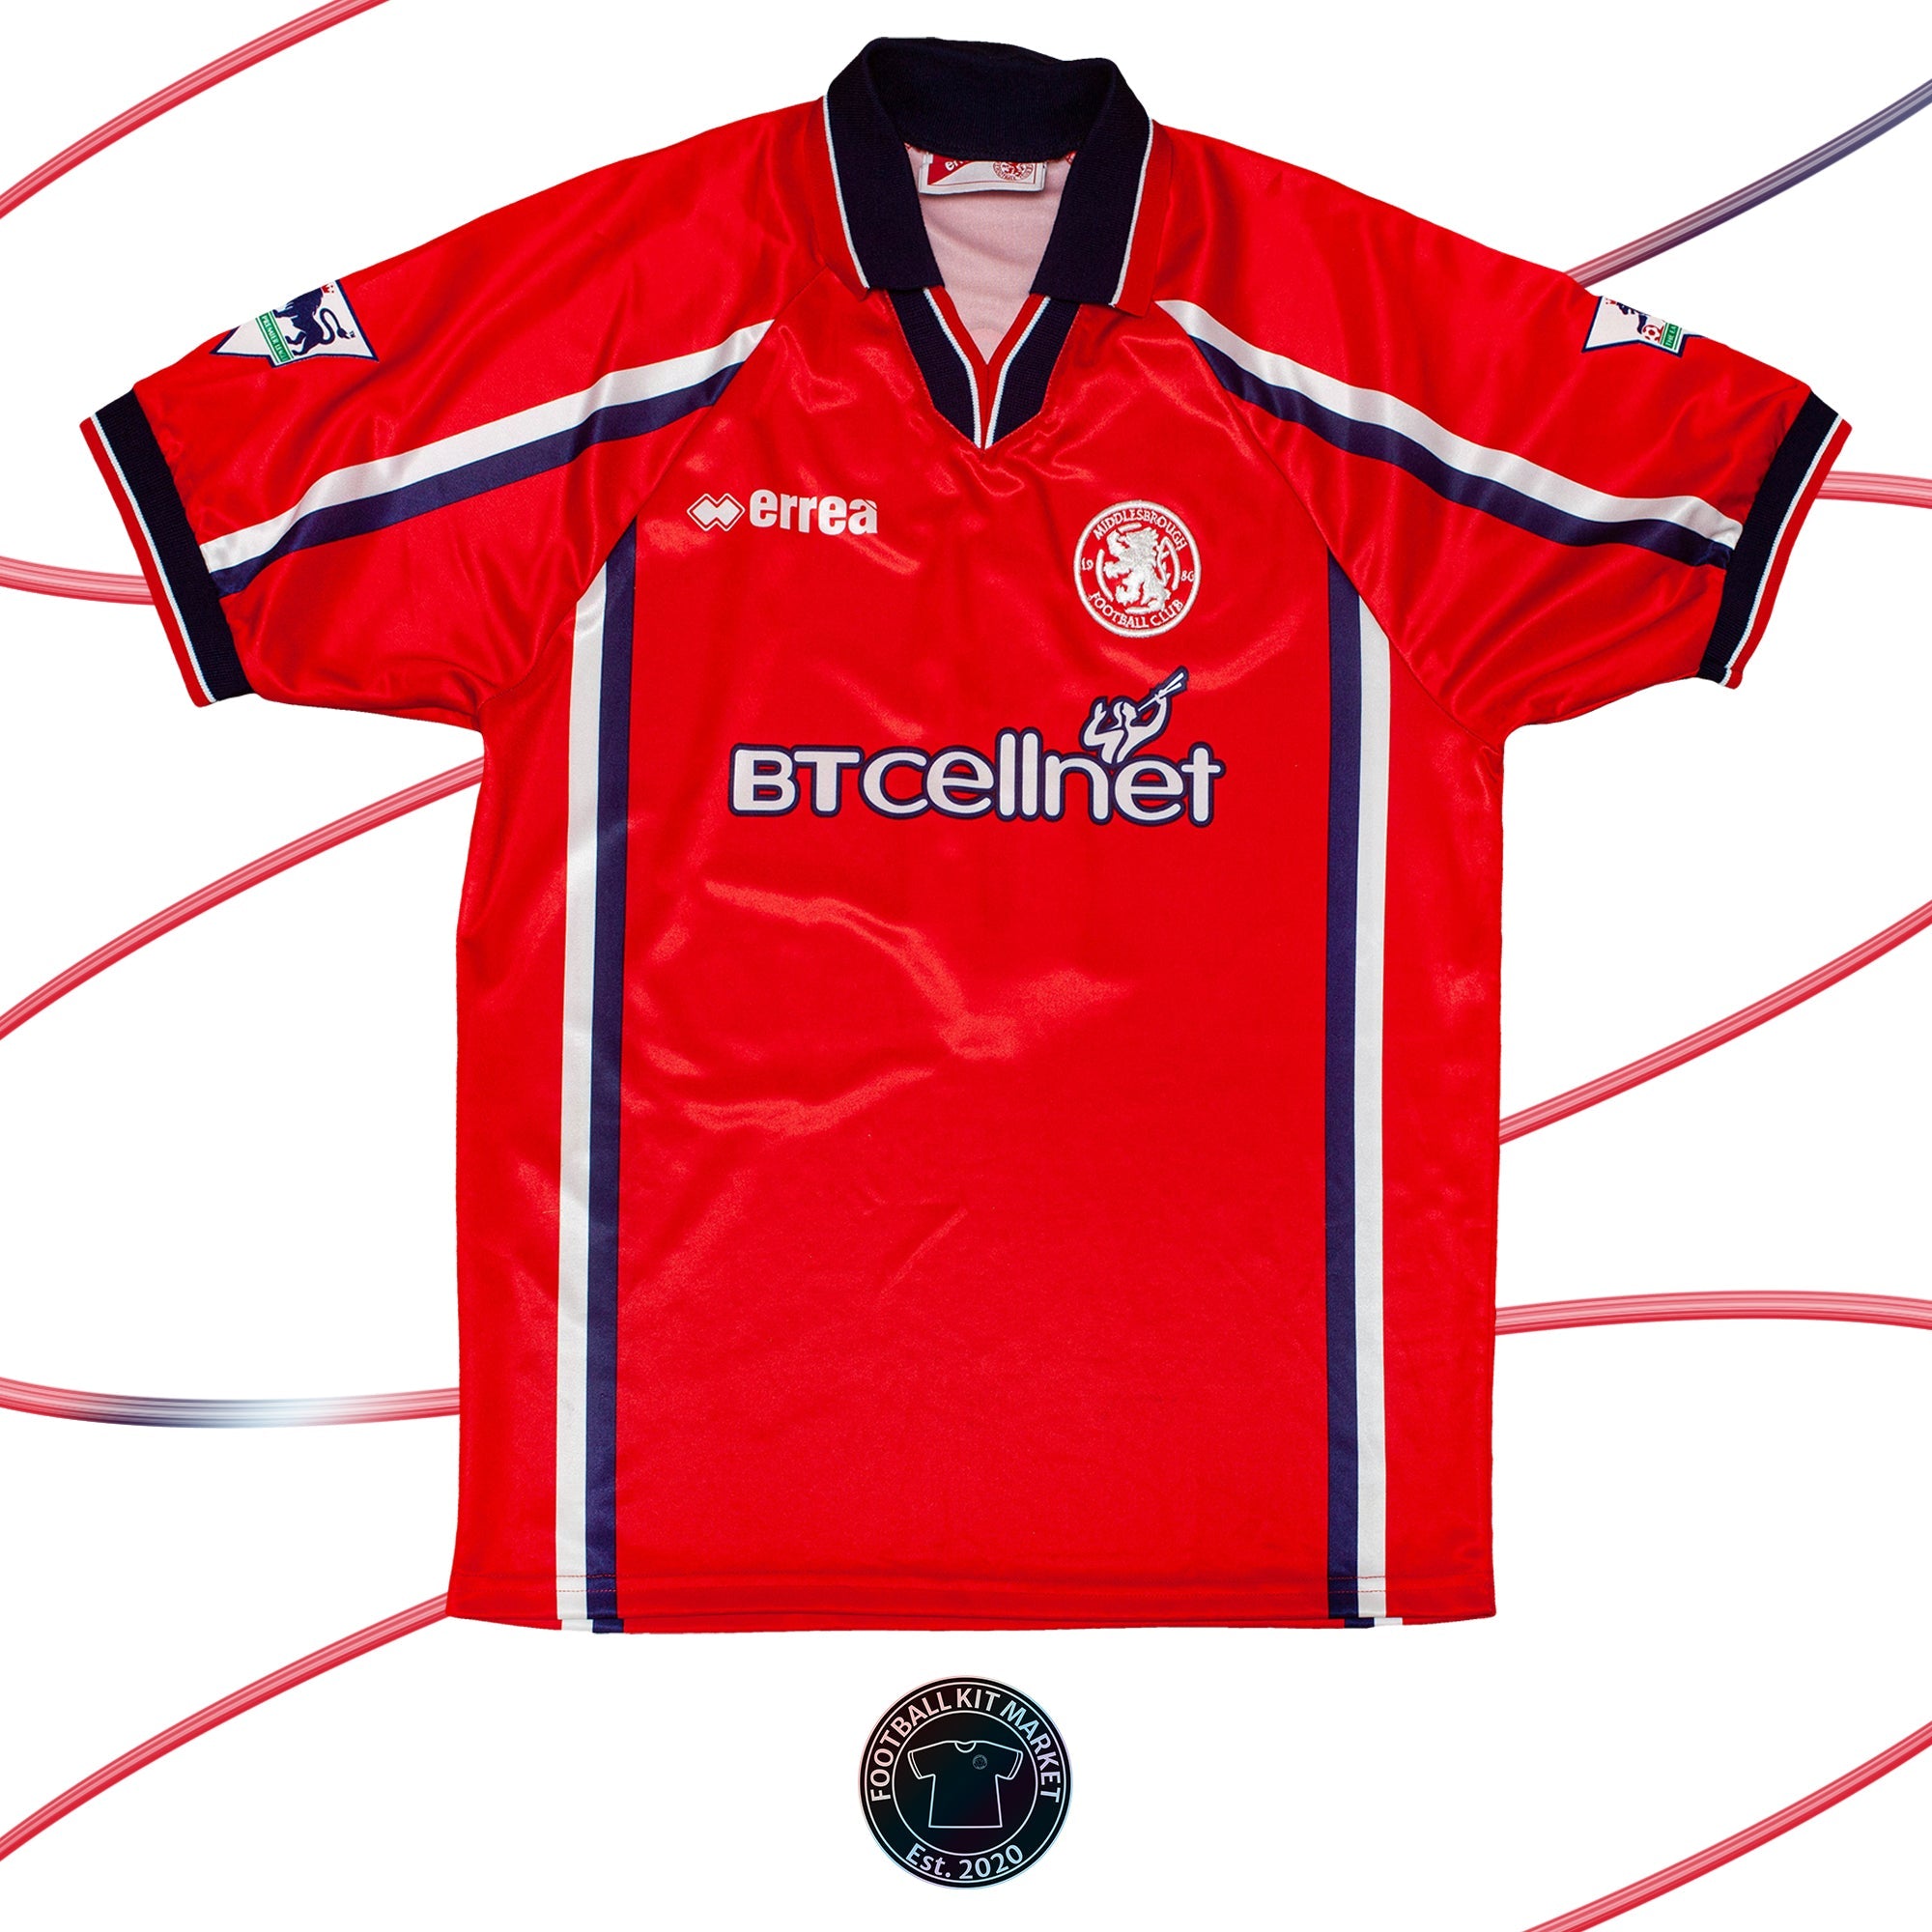 Genuine MIDDLESBROUGH Home Shirt GASCOIGNE (1999-2000) - ERREA (M) - Product Image from Football Kit Market